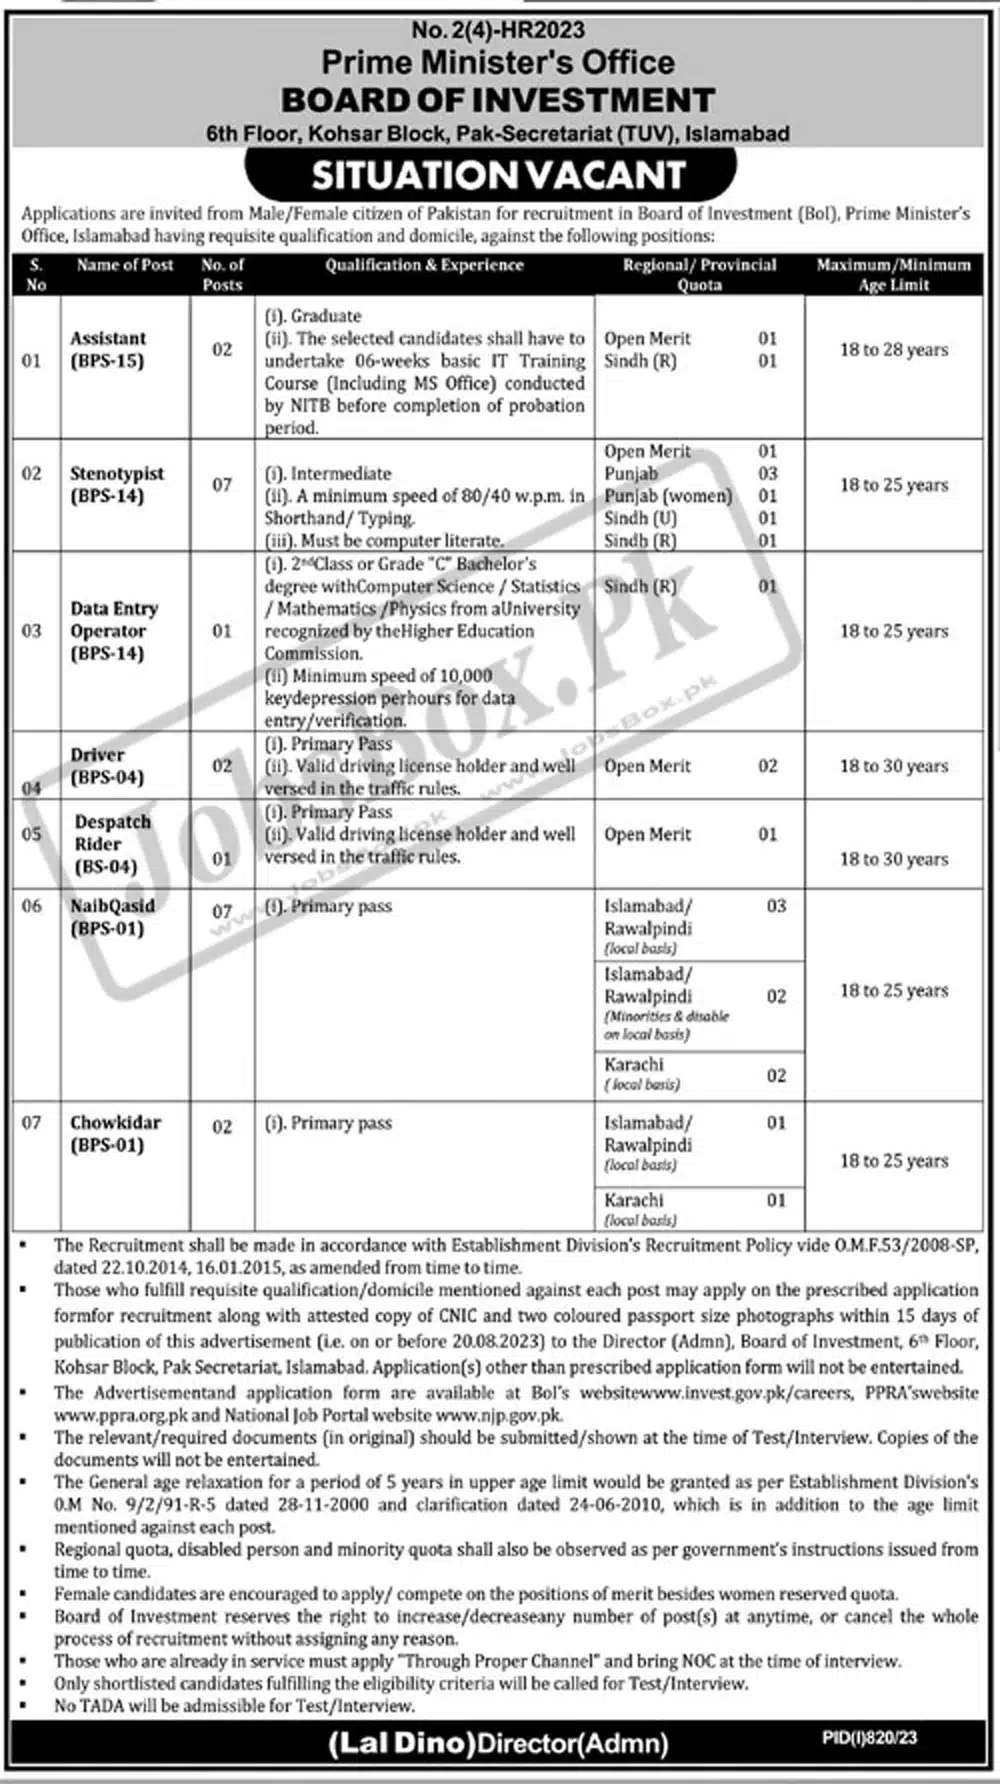 Prime Minister Office Jobs 2023 - www.invest.gov.pk Application Form